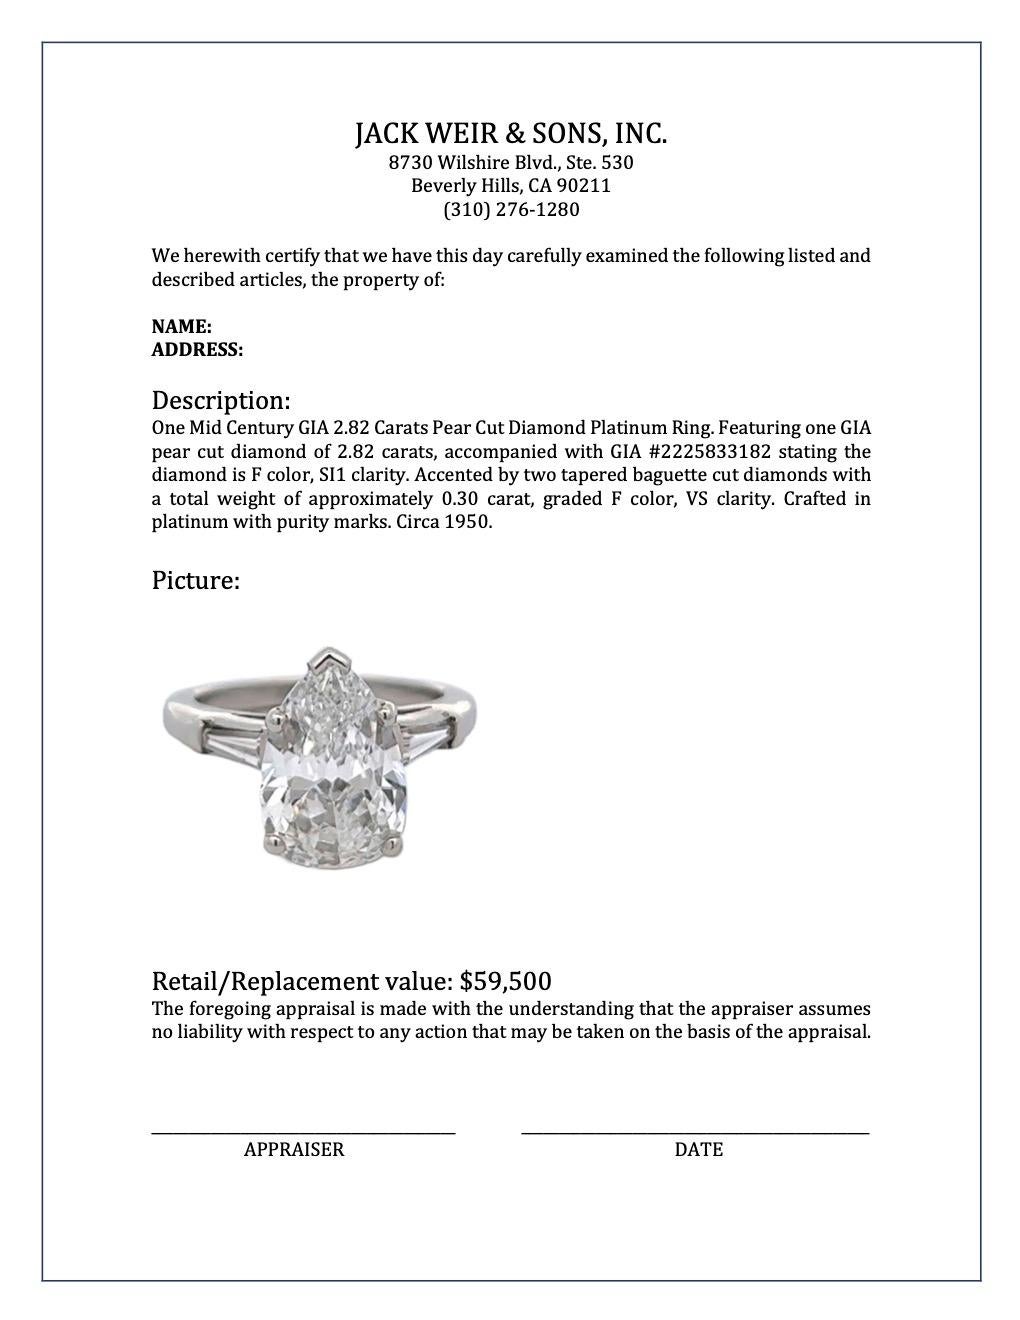 Midcentury GIA 2.82 Carats Pear Cut Diamond Platinum Ring 3